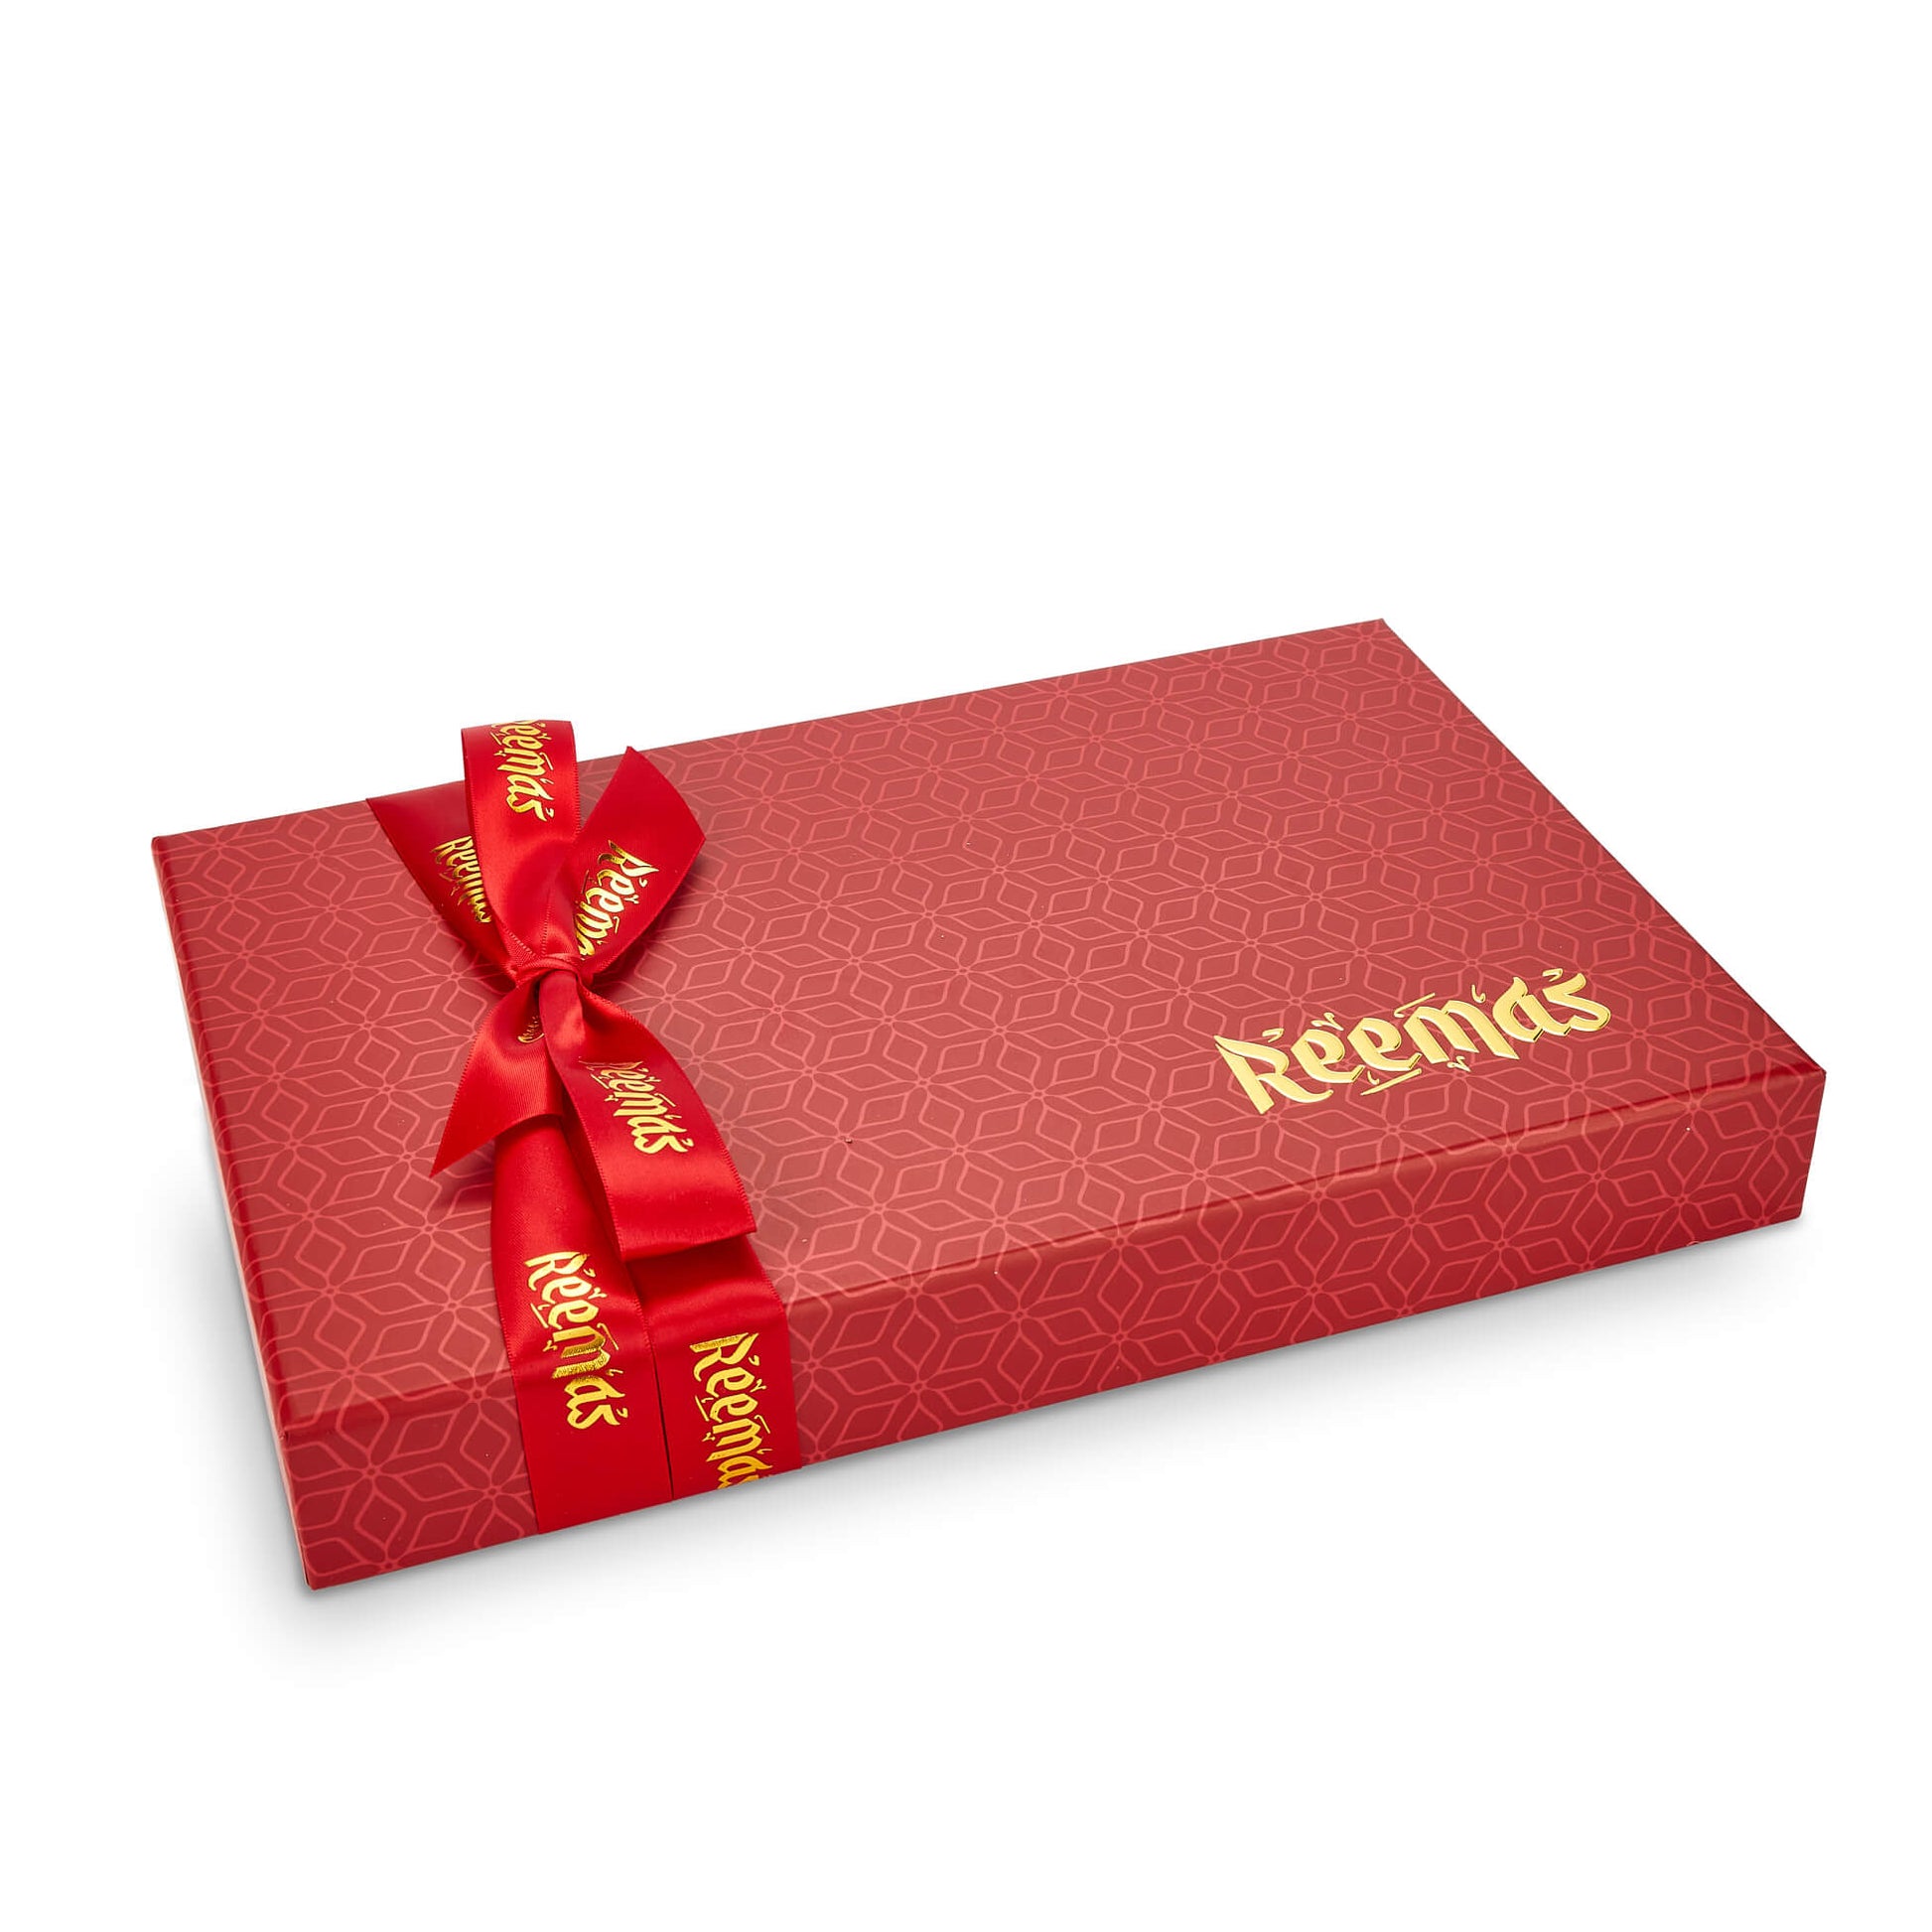 Reemas Dates Gift Box special healthy basket hamper sharing celebration